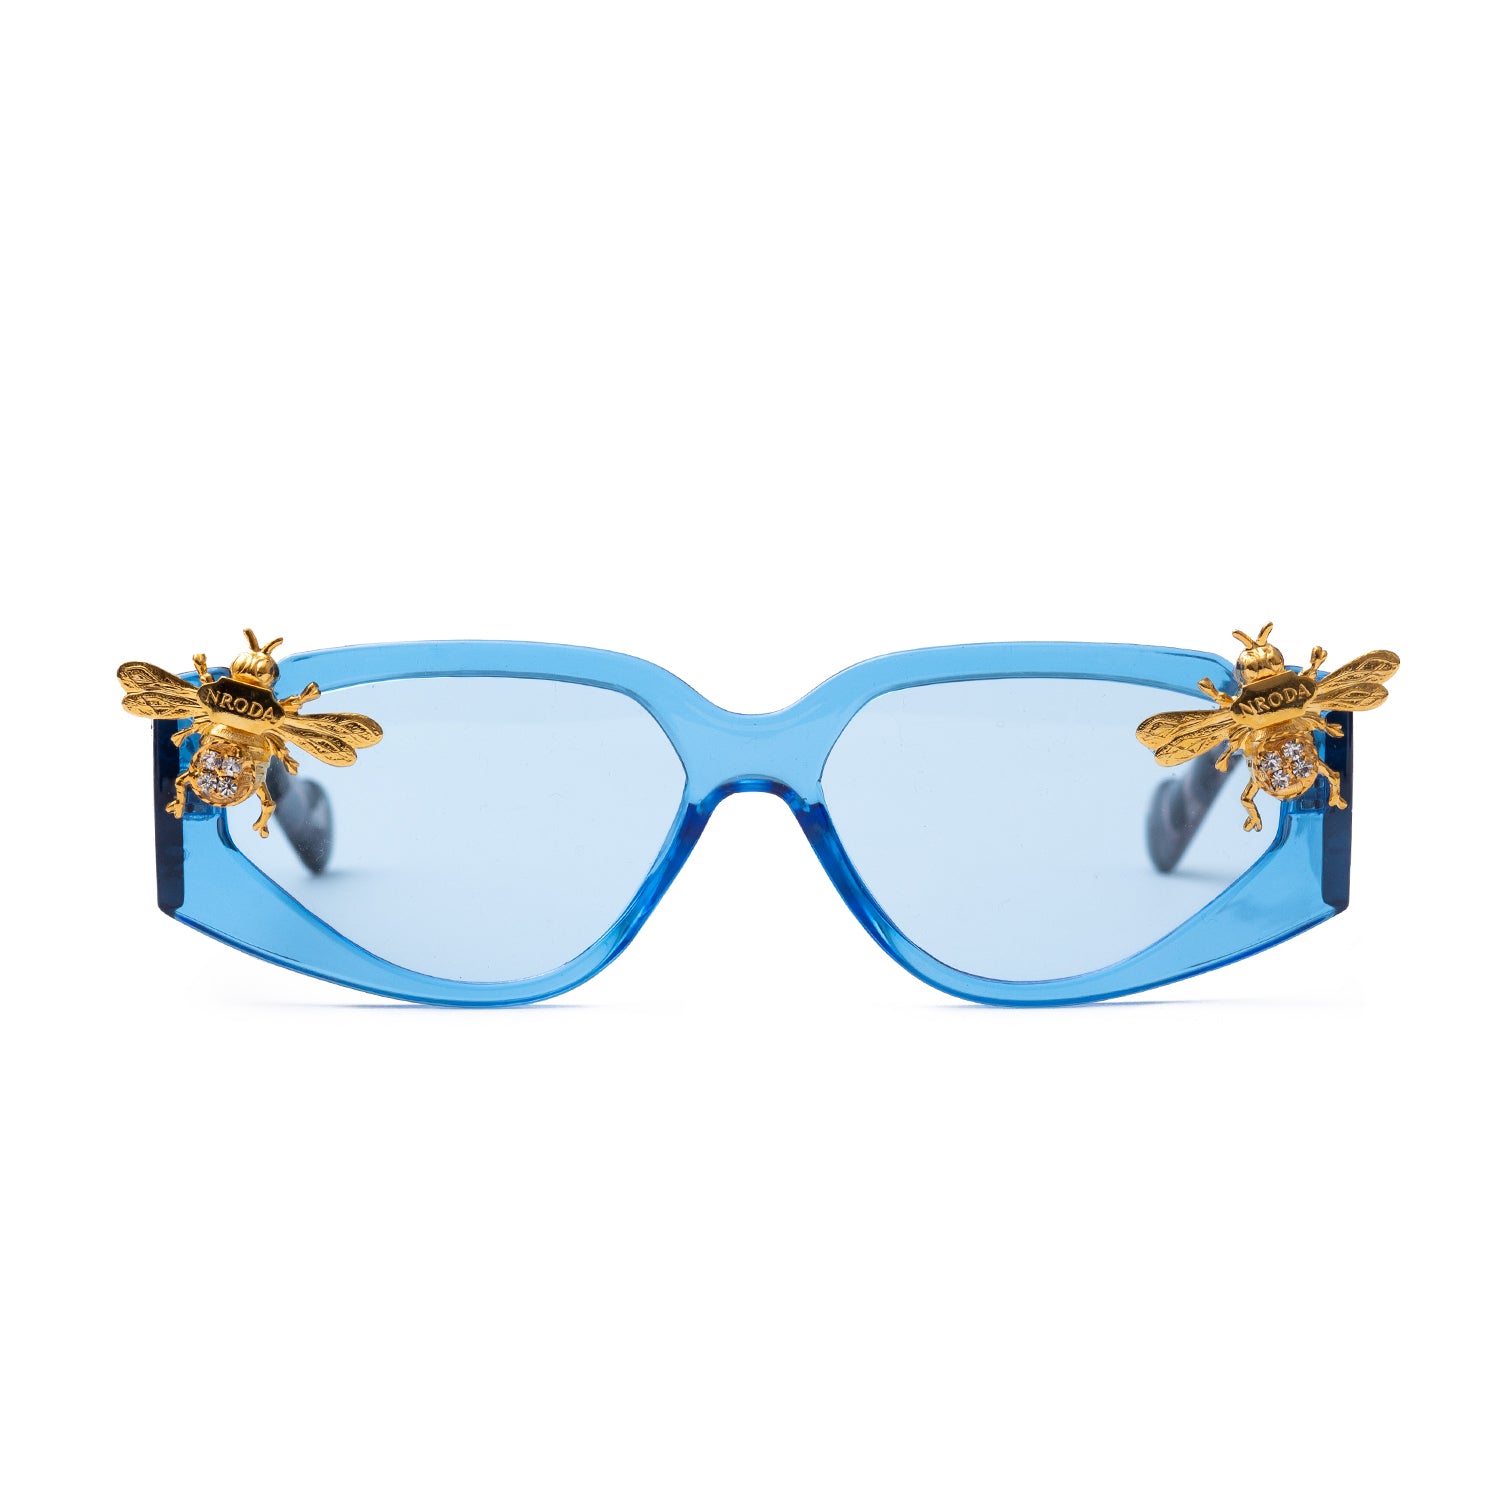 Nroda Riviera Bee - Gemstone Edition Sapphire Blue Eyewear Sunglasses Collection, Tnemnroda man- NRODA